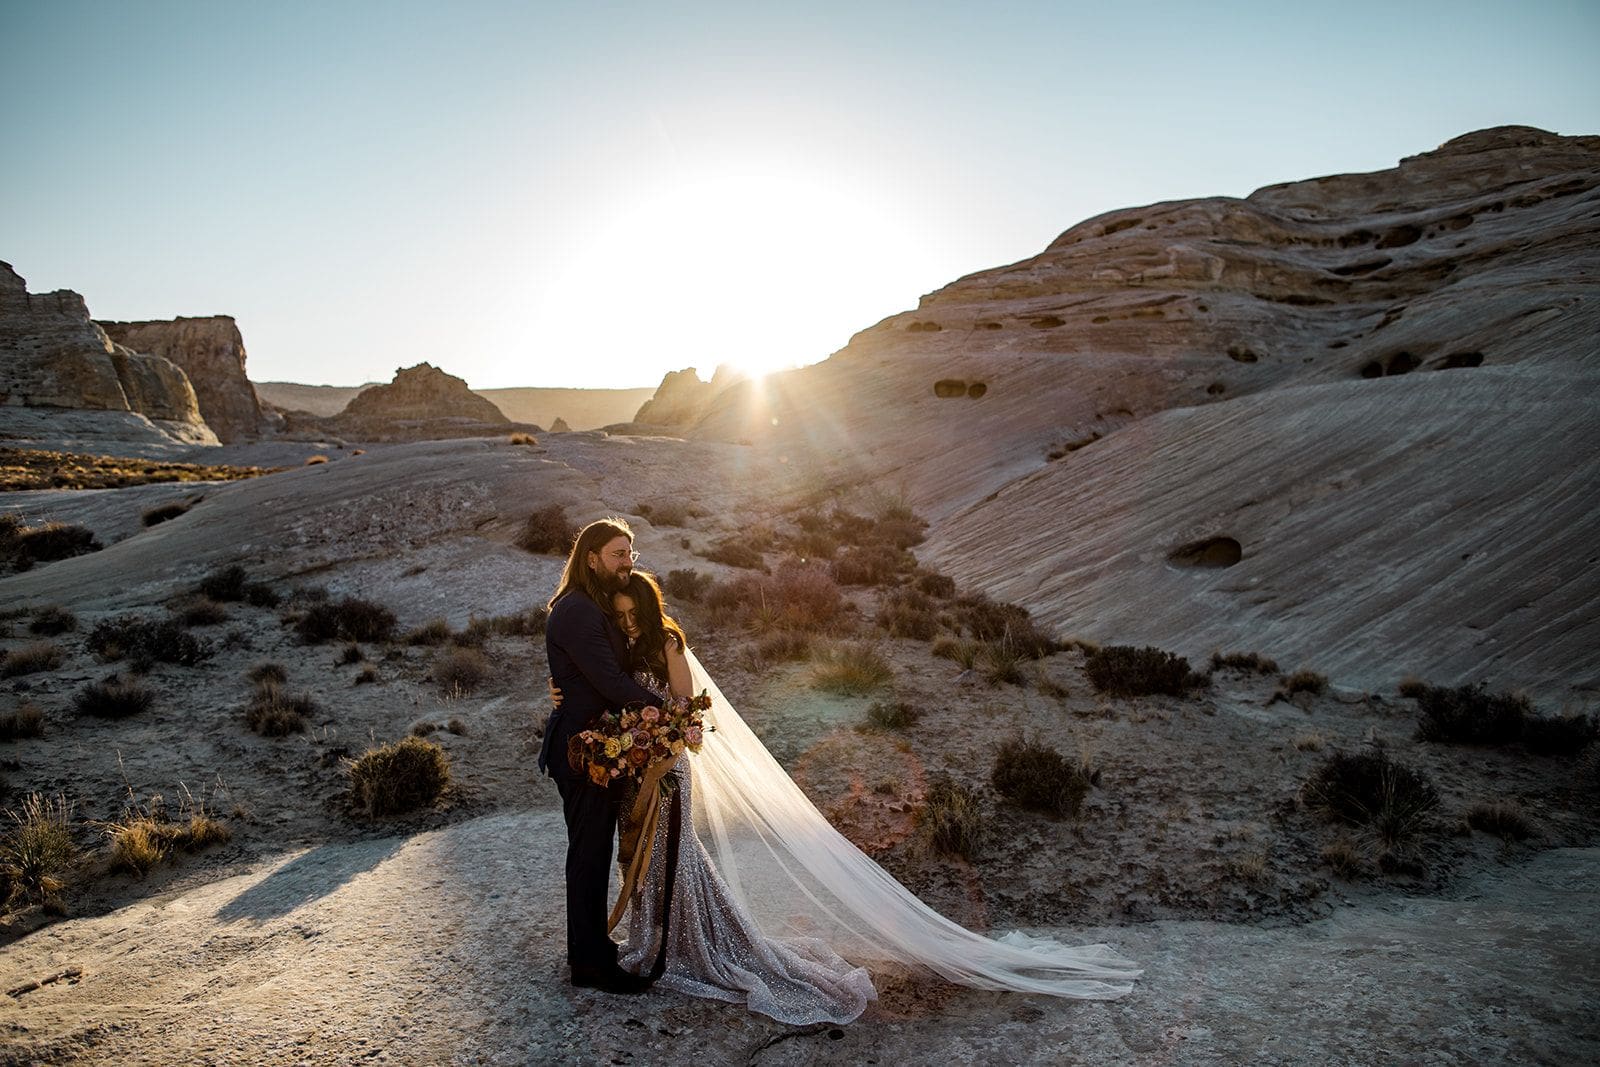 Bride and groom embrace in Utah desert as the sun sets